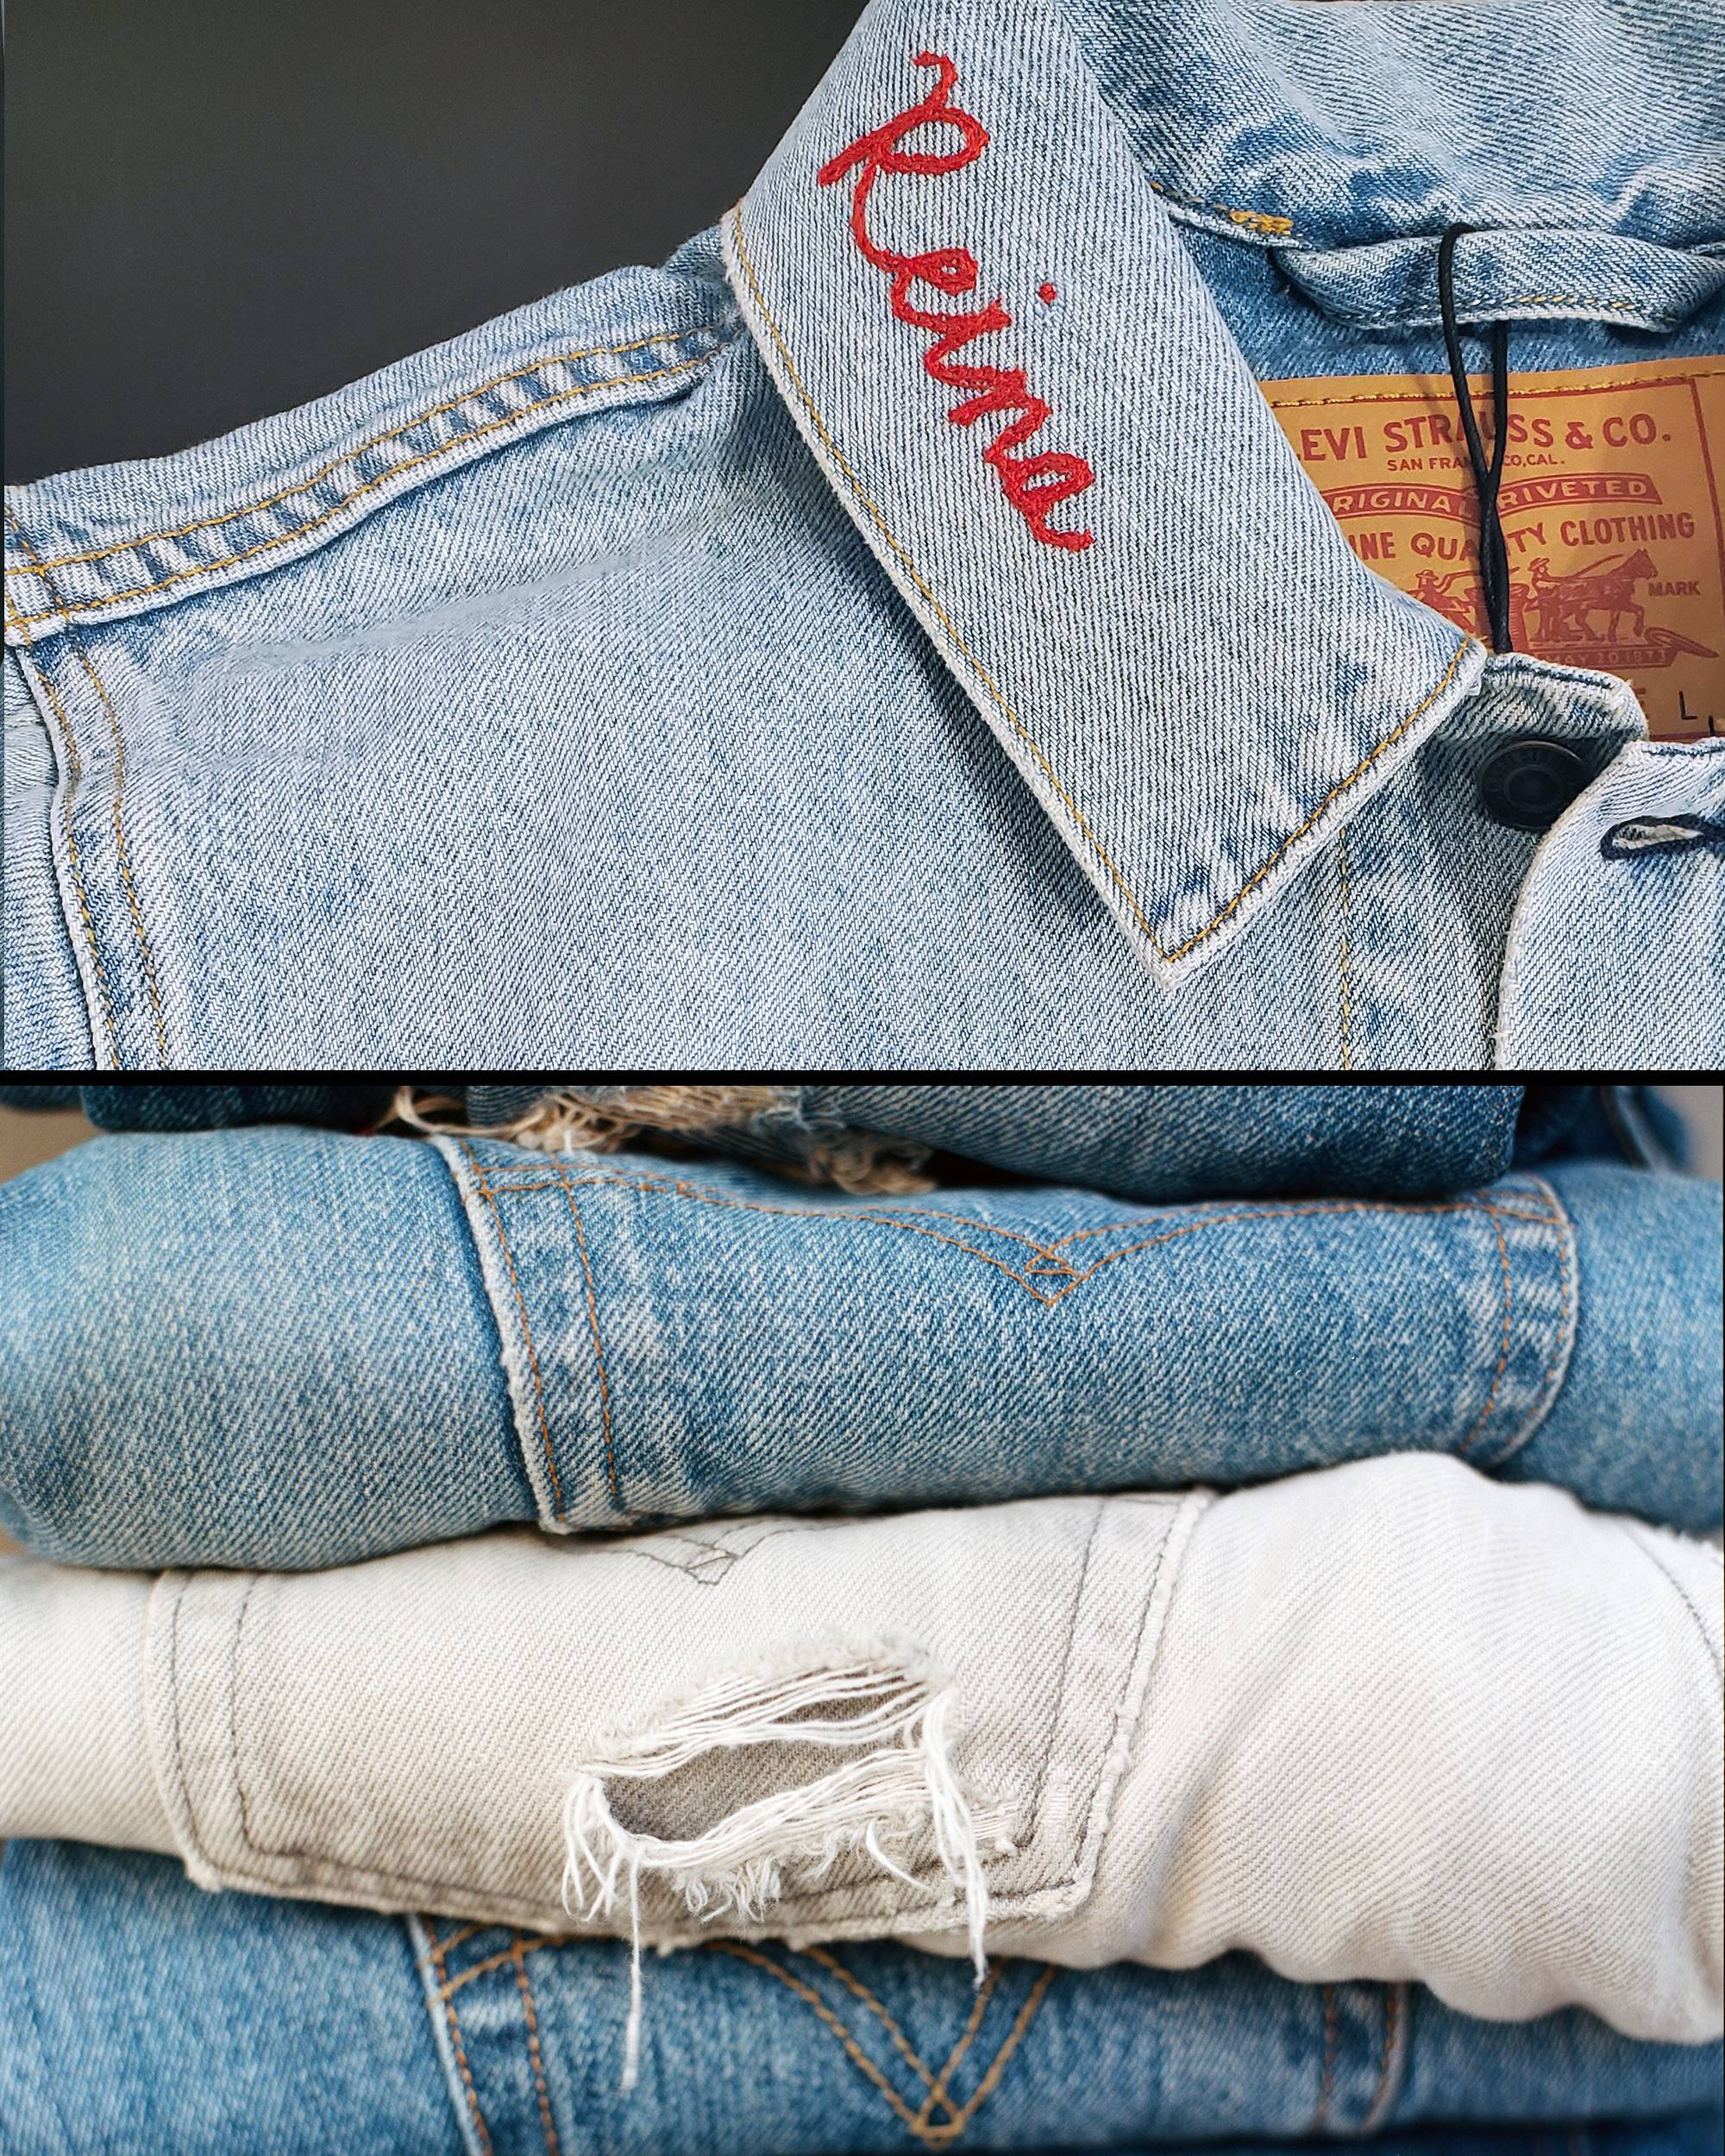 Jeans, Denim Clothing